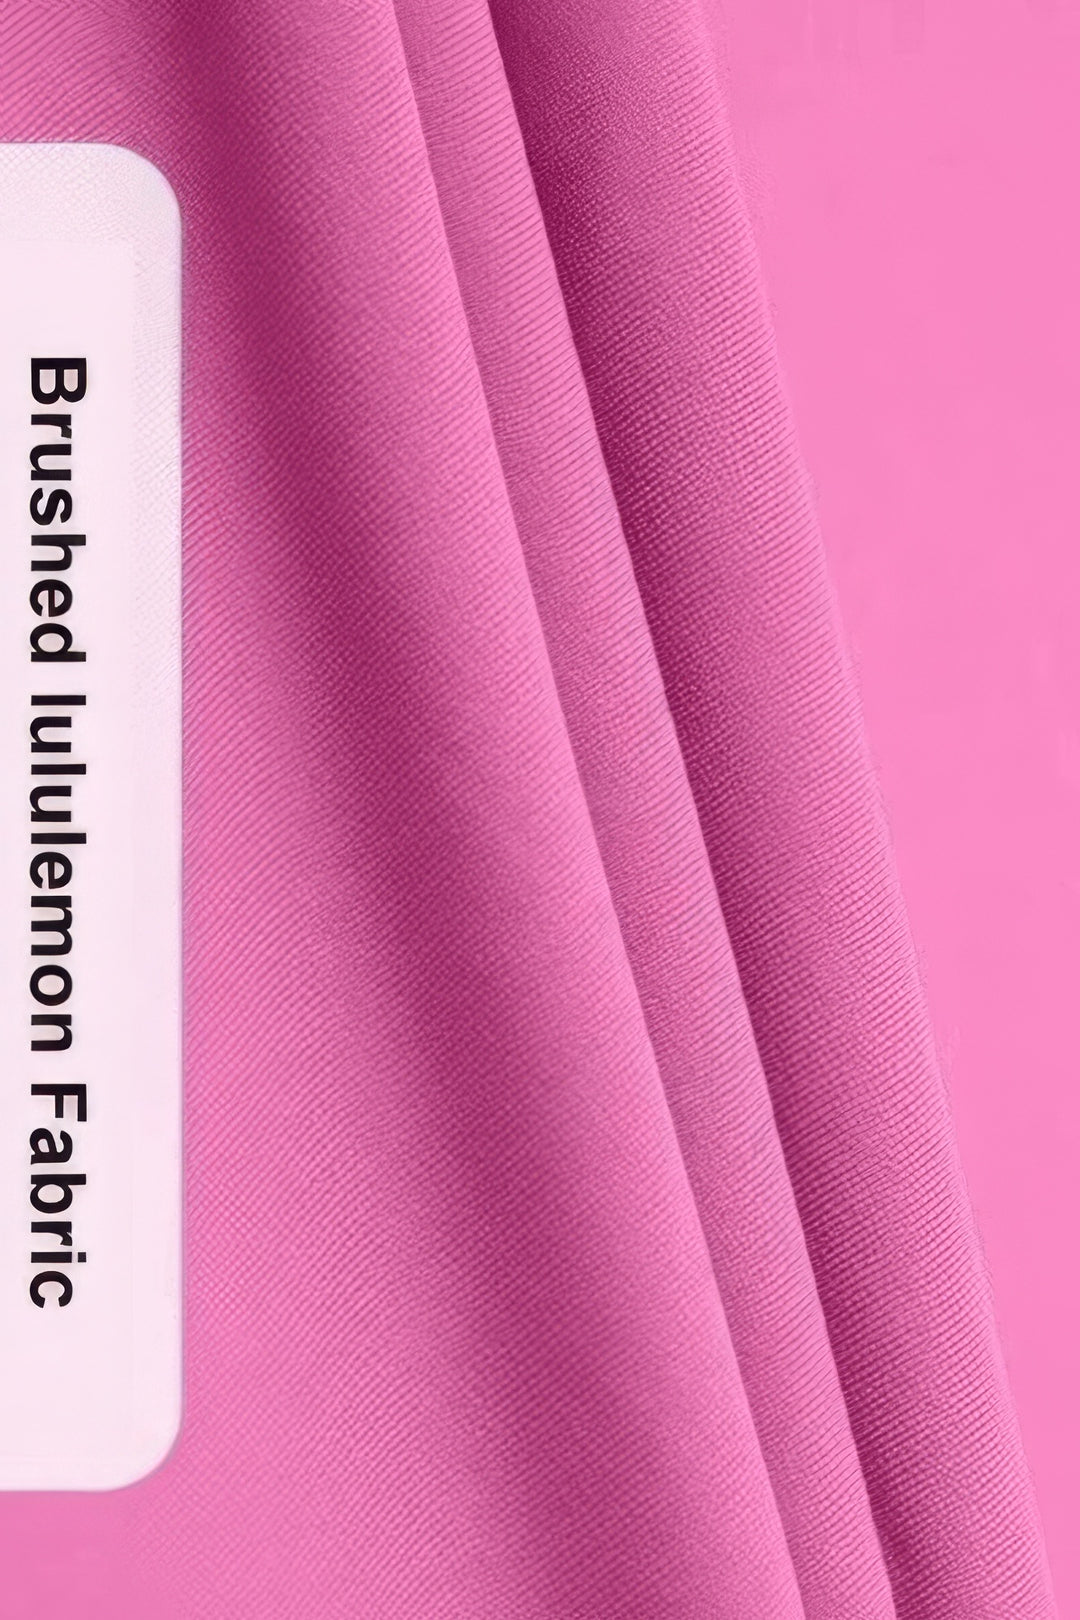 Premium Cross Waist Band Yoga Pants, Pink